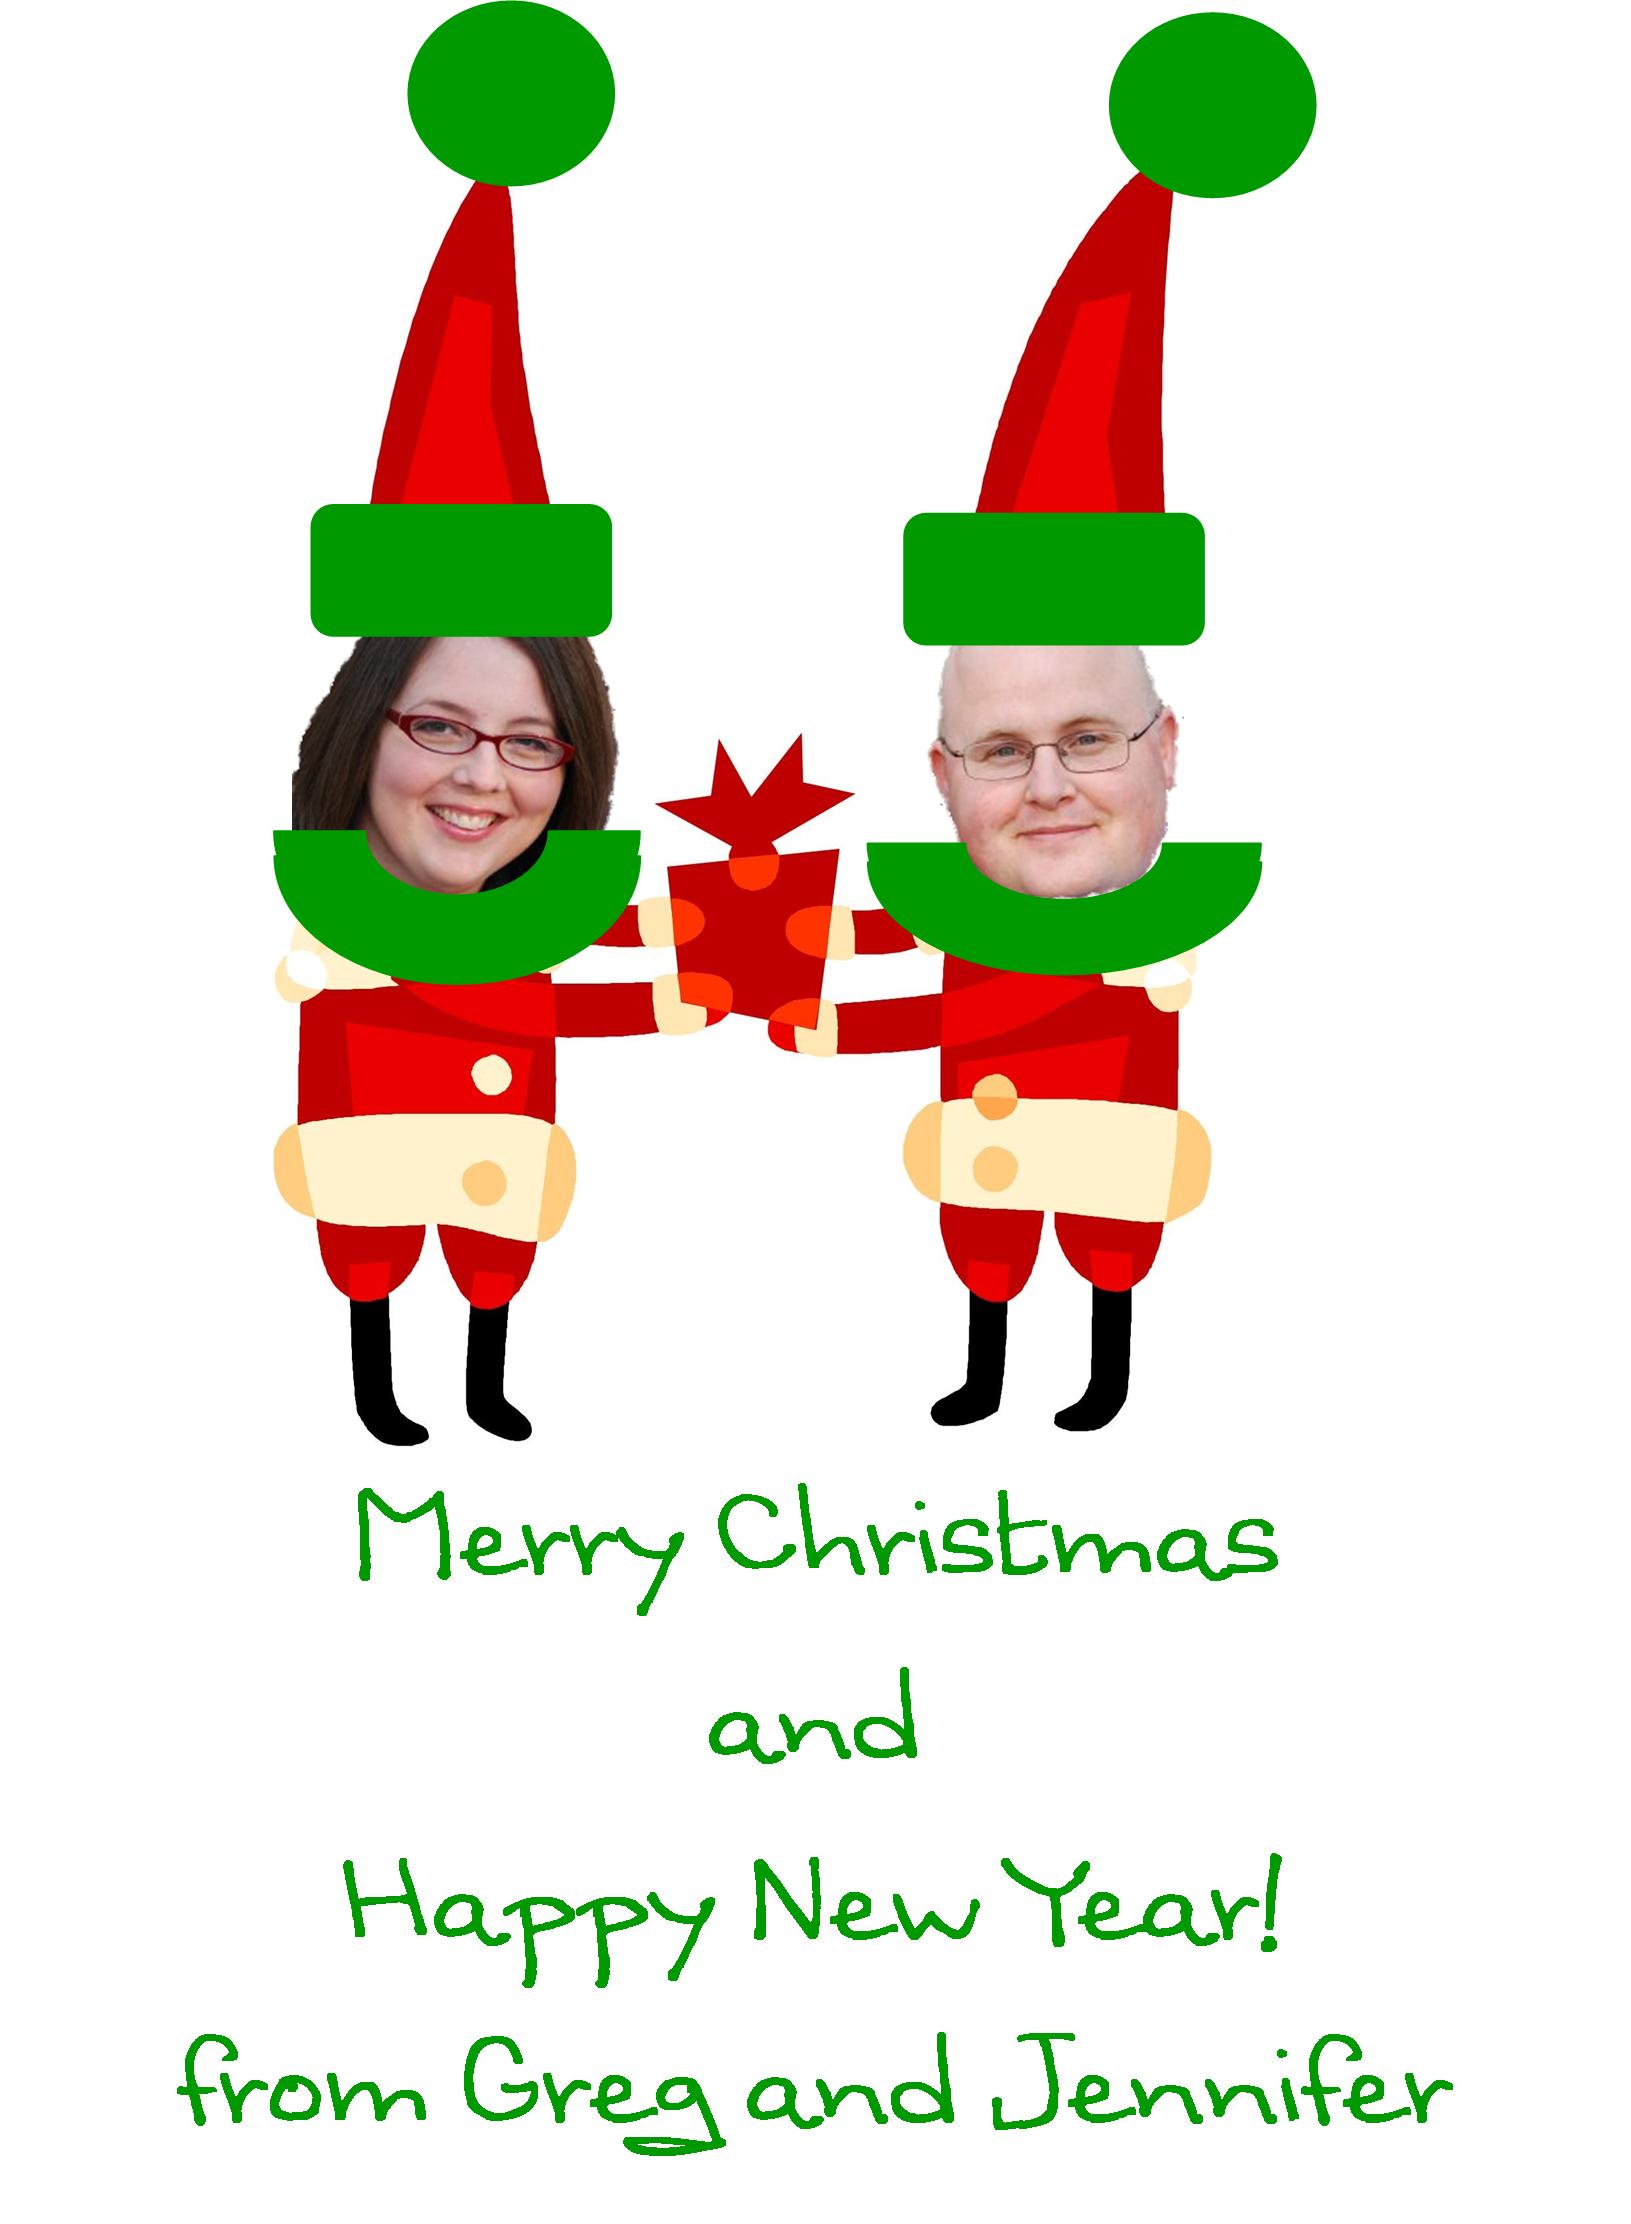 Merry Christmas | Greg and Jennifer's World